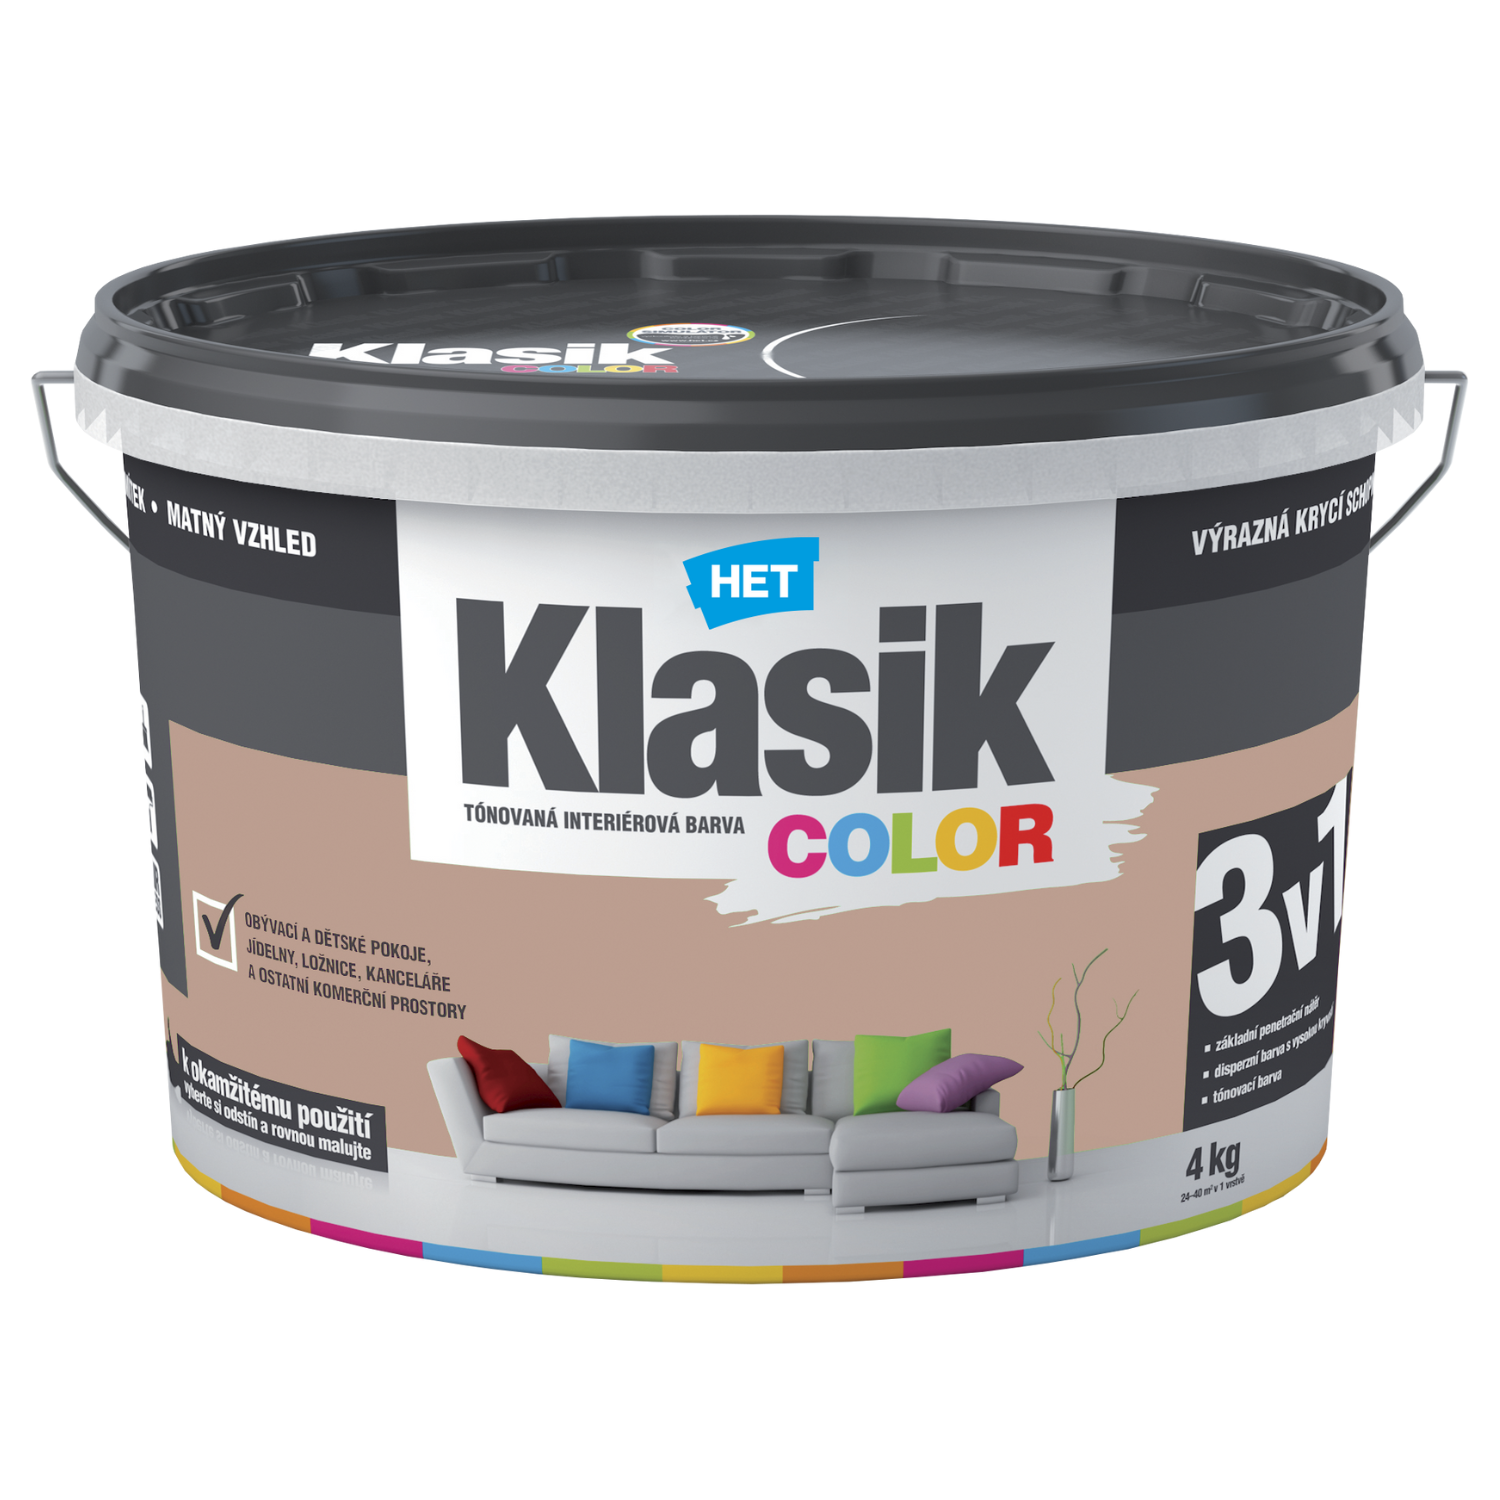 HET Klasik COLOR tónovaná interiérová akrylátová disperzná oteruvzdorná farba 4 kg, KC0257 - hnedý orechový